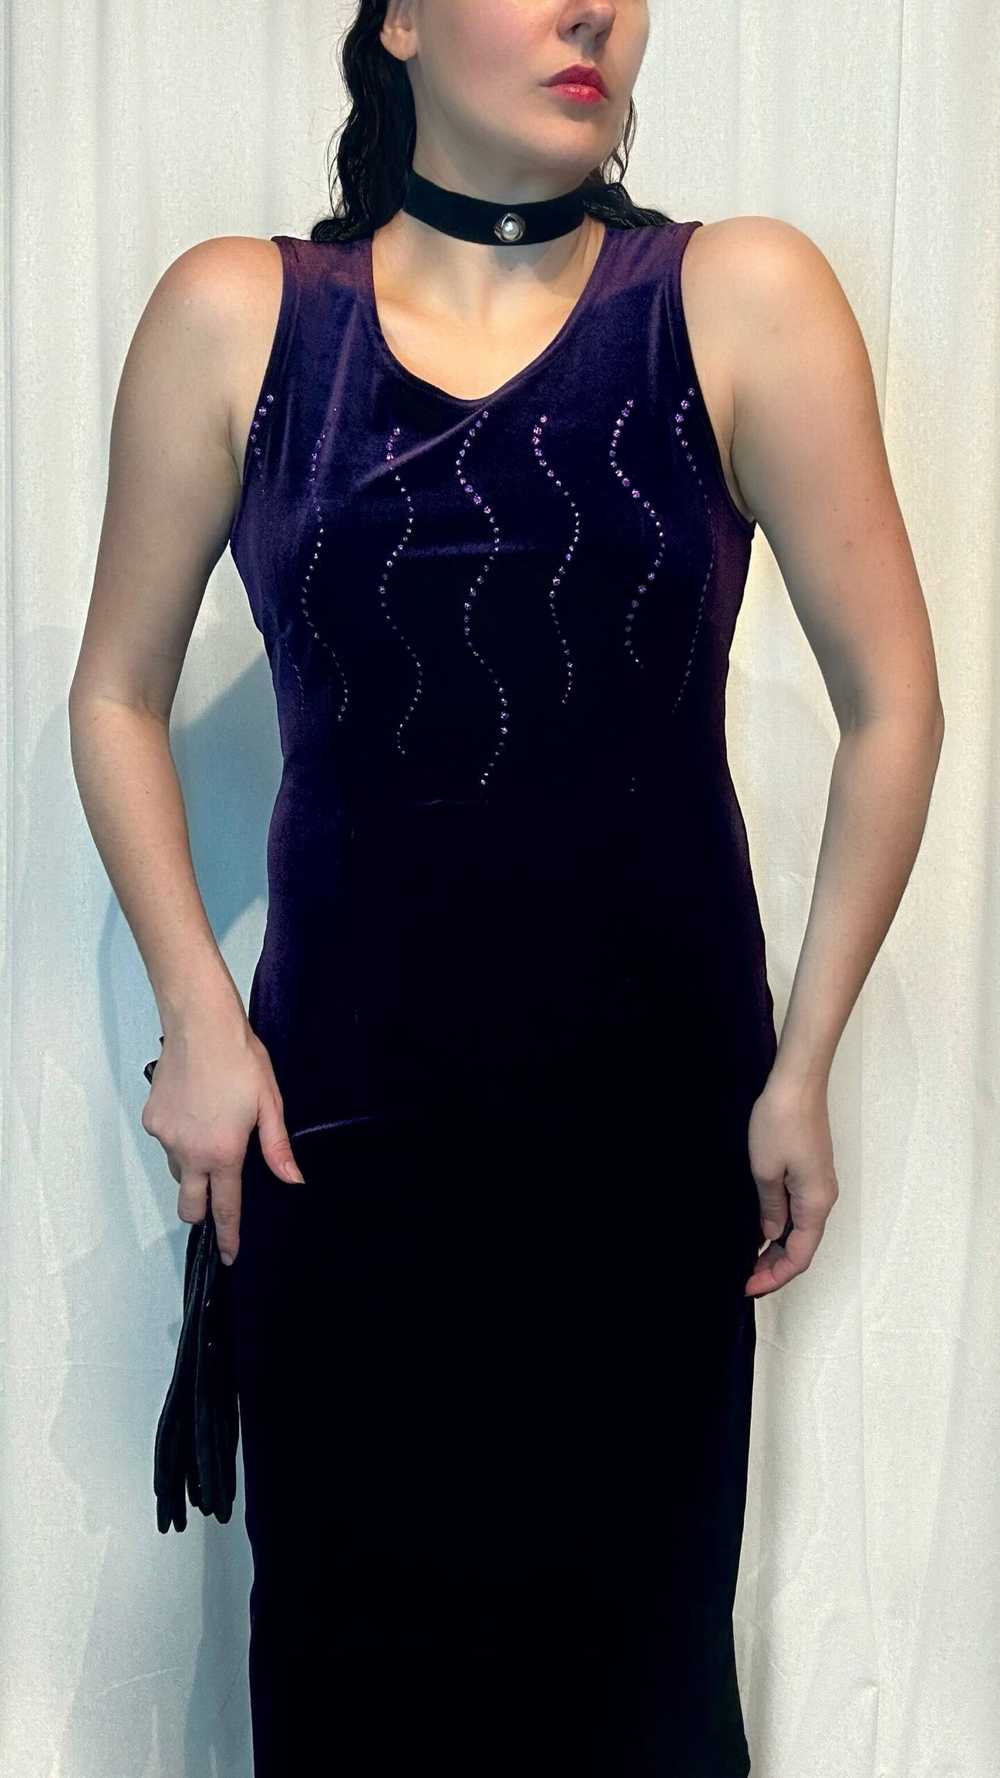 Stretchy dark purple dress - image 2